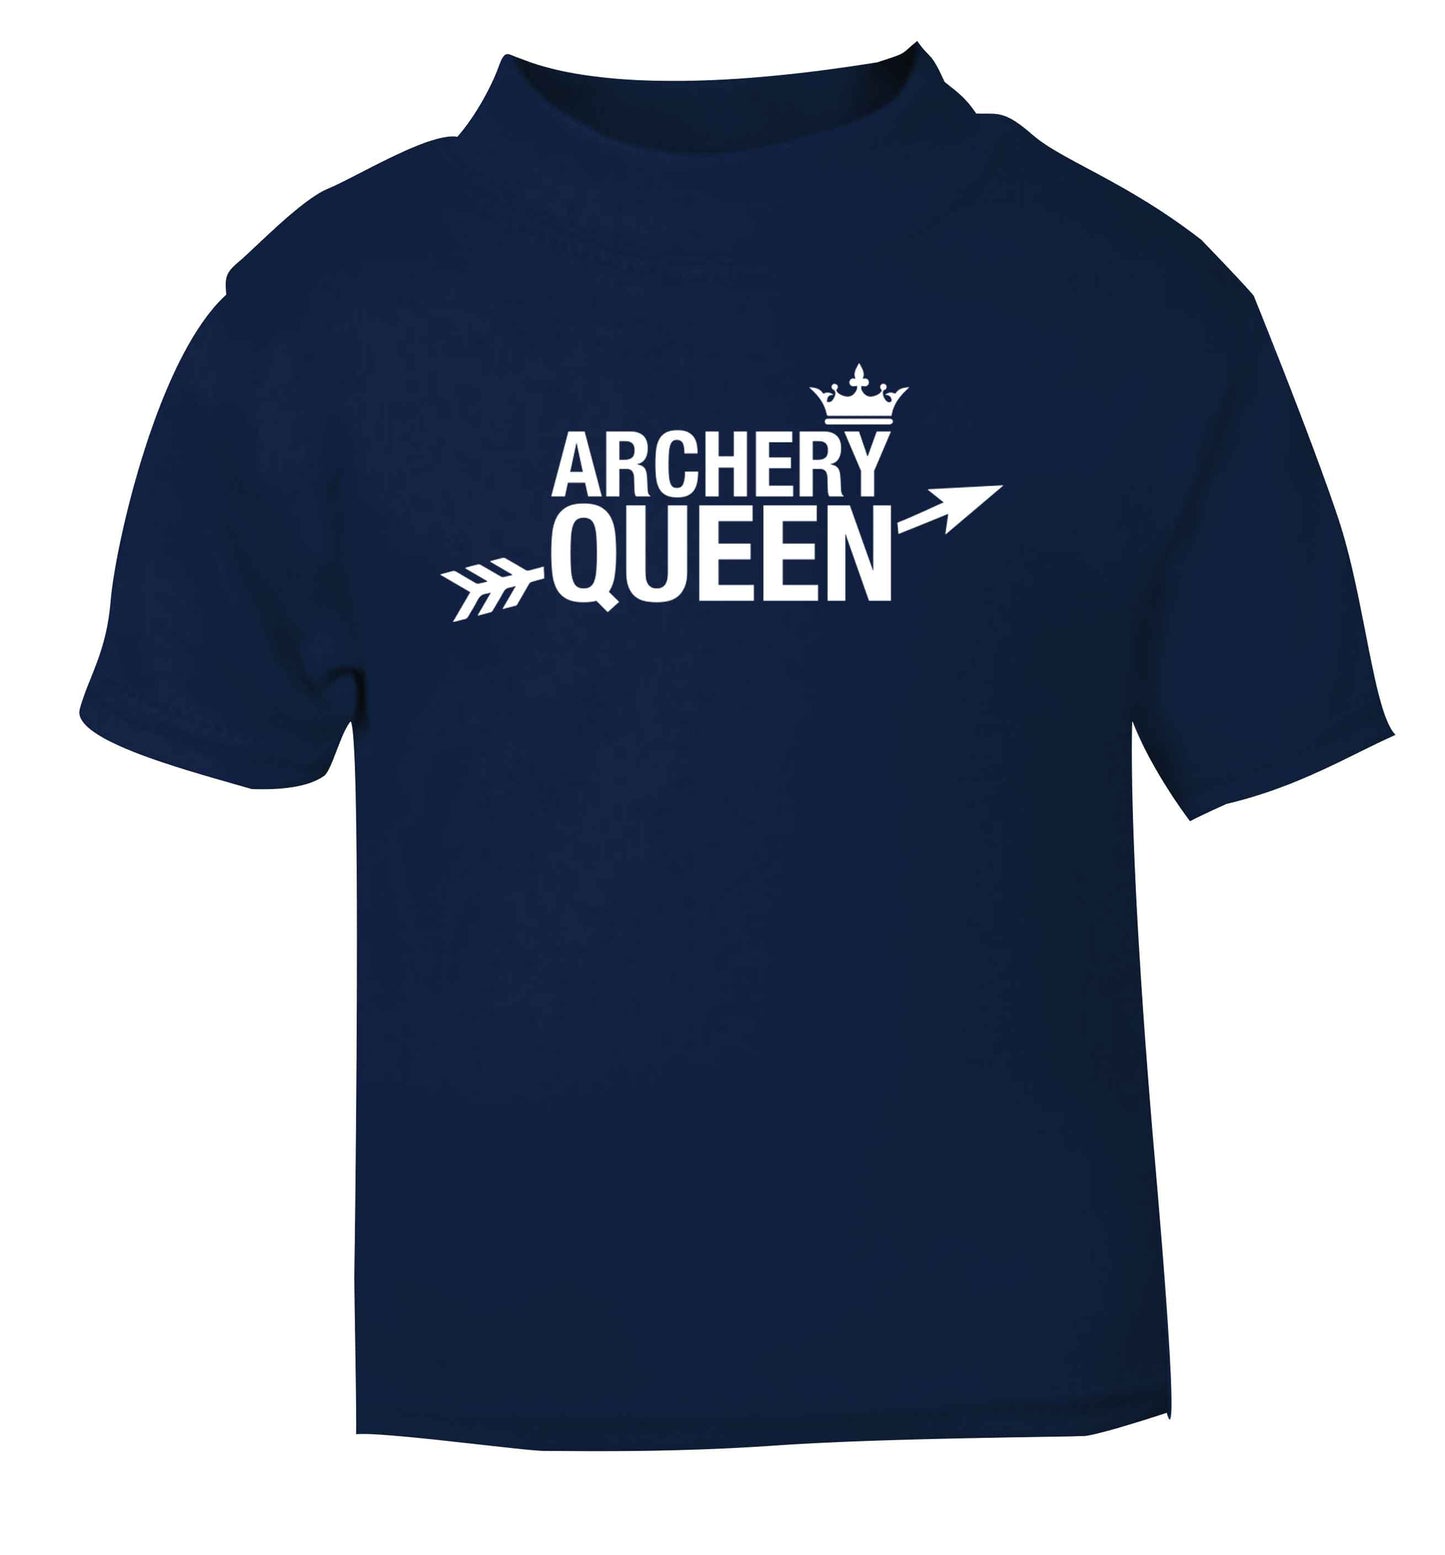 Archery queen navy Baby Toddler Tshirt 2 Years